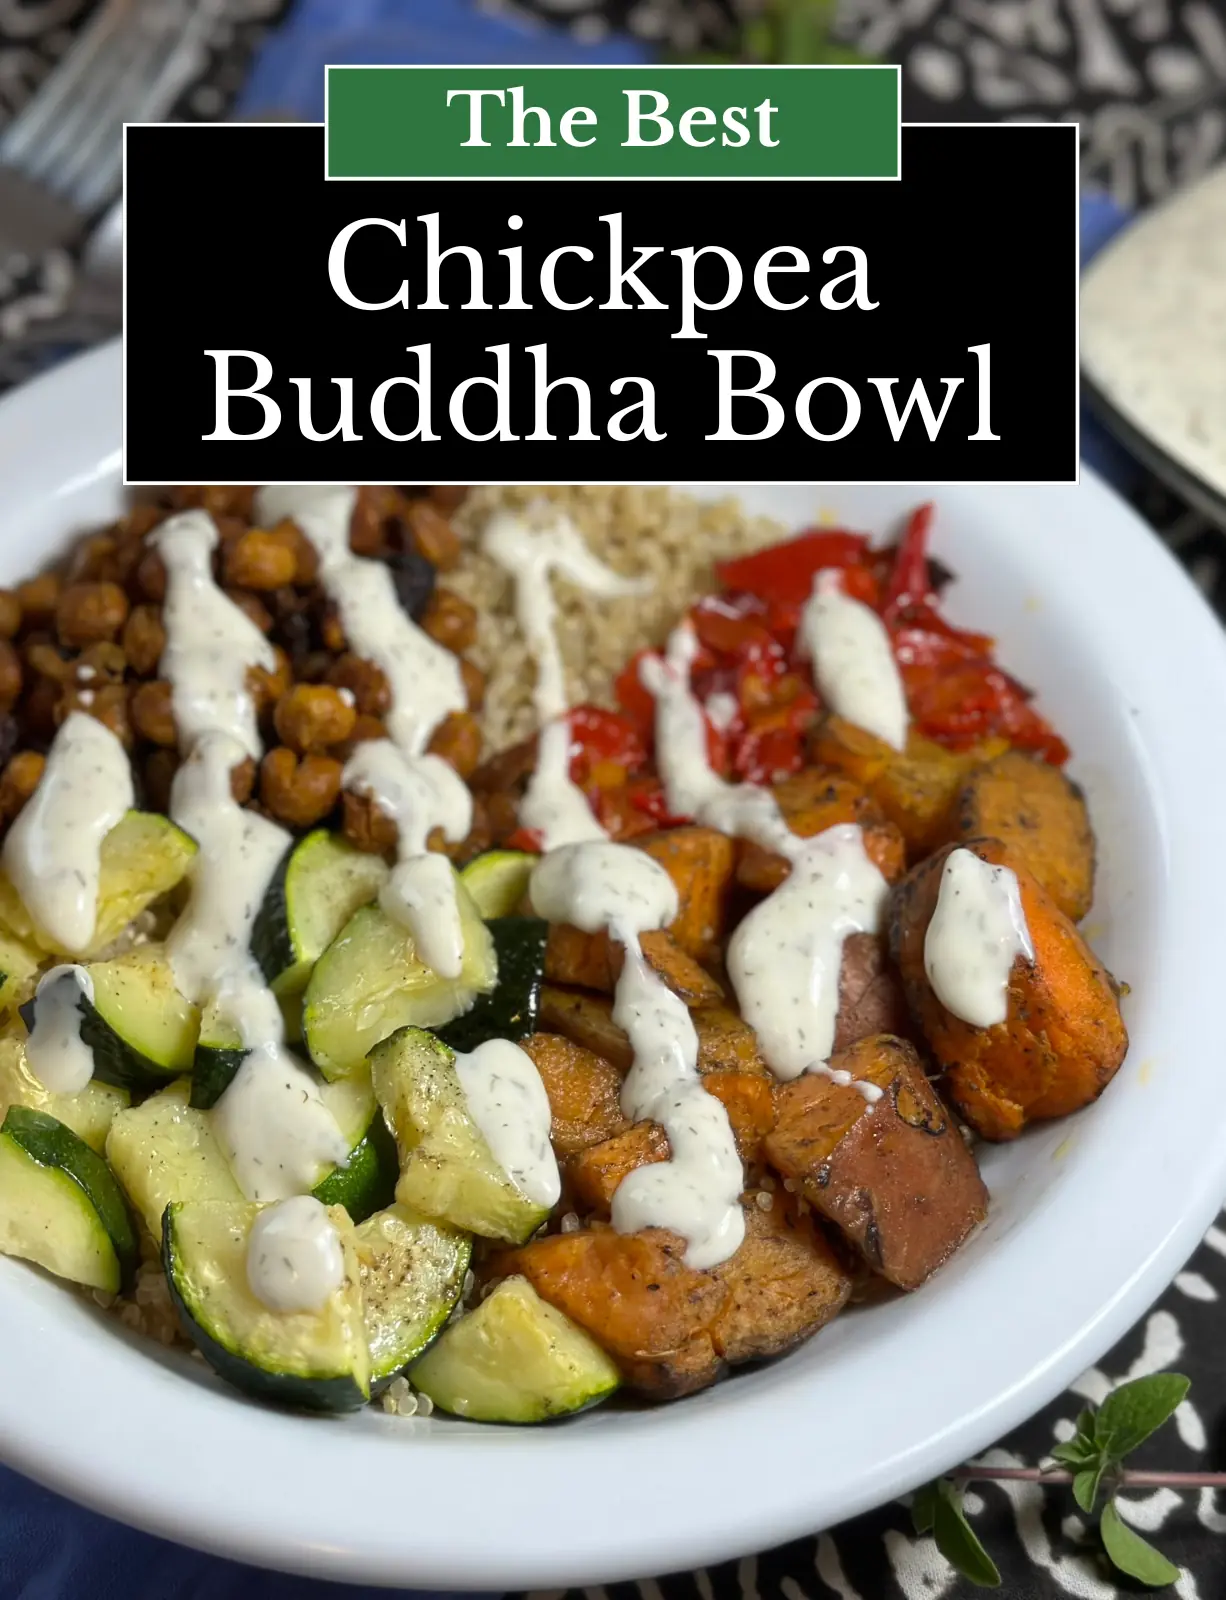 chickpea buddha bowl, quinoa buddha bowl, chickpea bowl, vegetable buddha bowl, easy quinoa bowl, quinoa bowl, vegetable buddha bowl, veggie quinoa bowl, homemade chickpea quinoa bowl, homemade buddha bowl, easy buddha bowl, what is a buddha bowl, buddha bowl, chickpea veggie buddha bowl